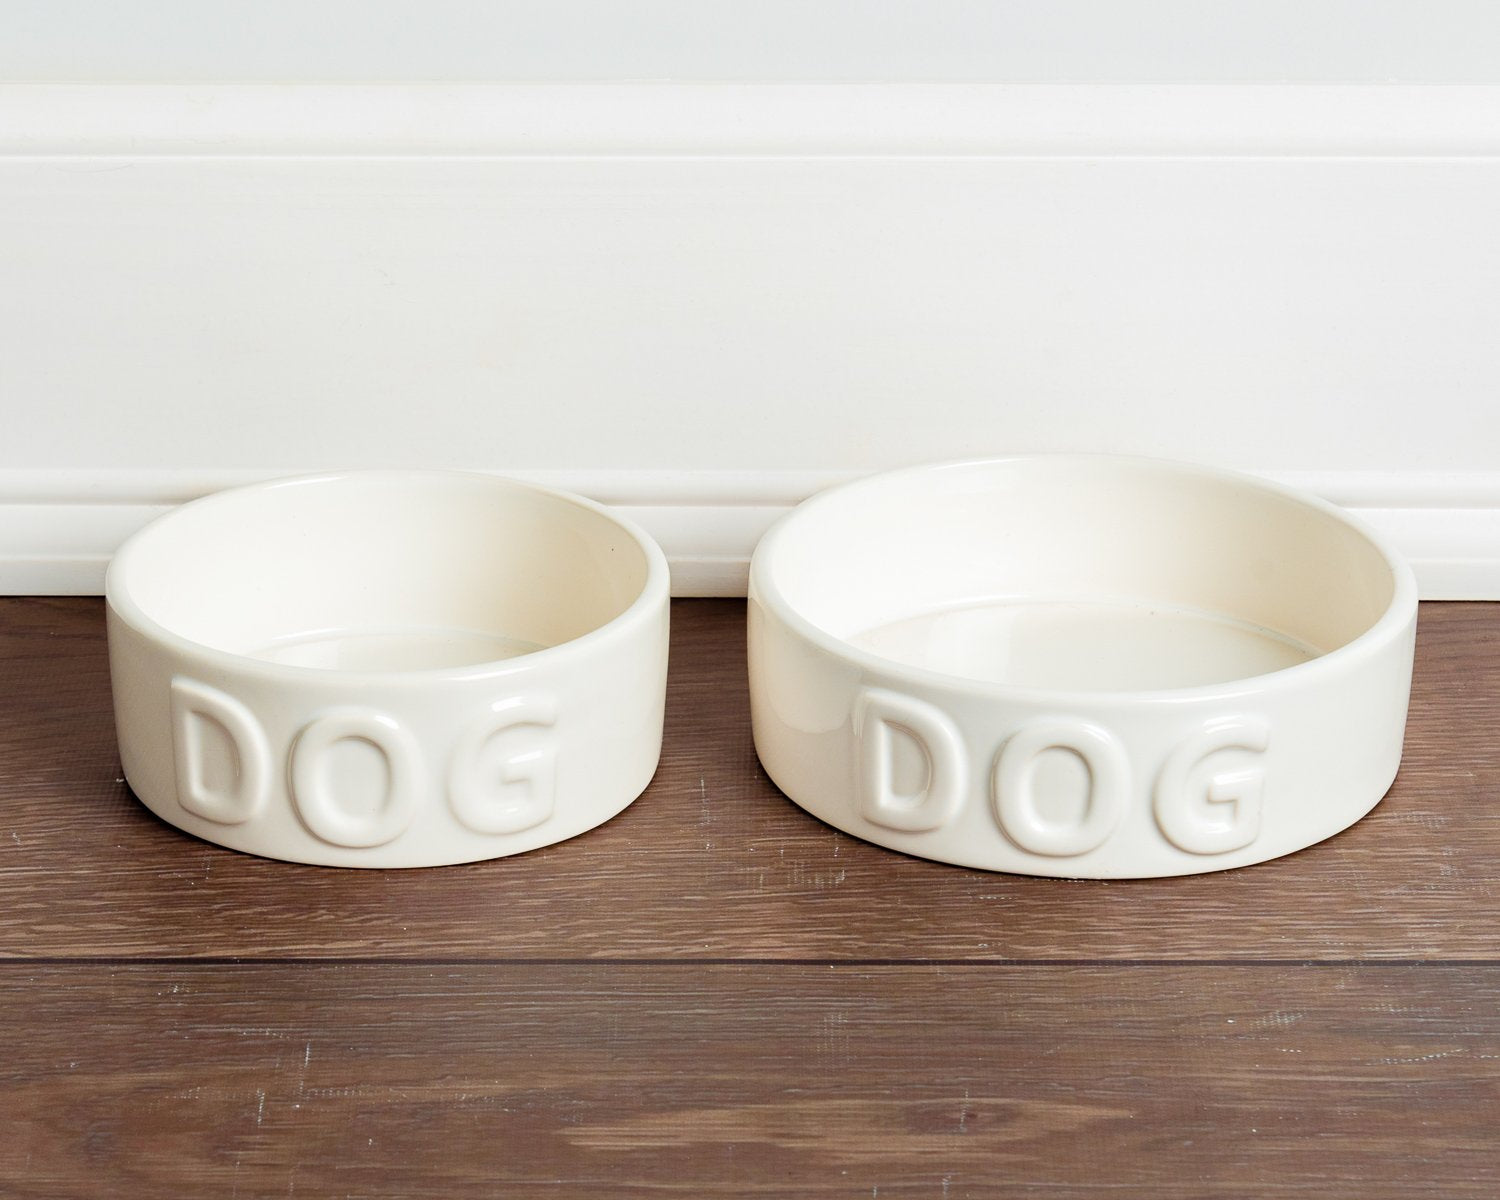 Park Life Designs Classic Dog Pet Bowl, Medium White